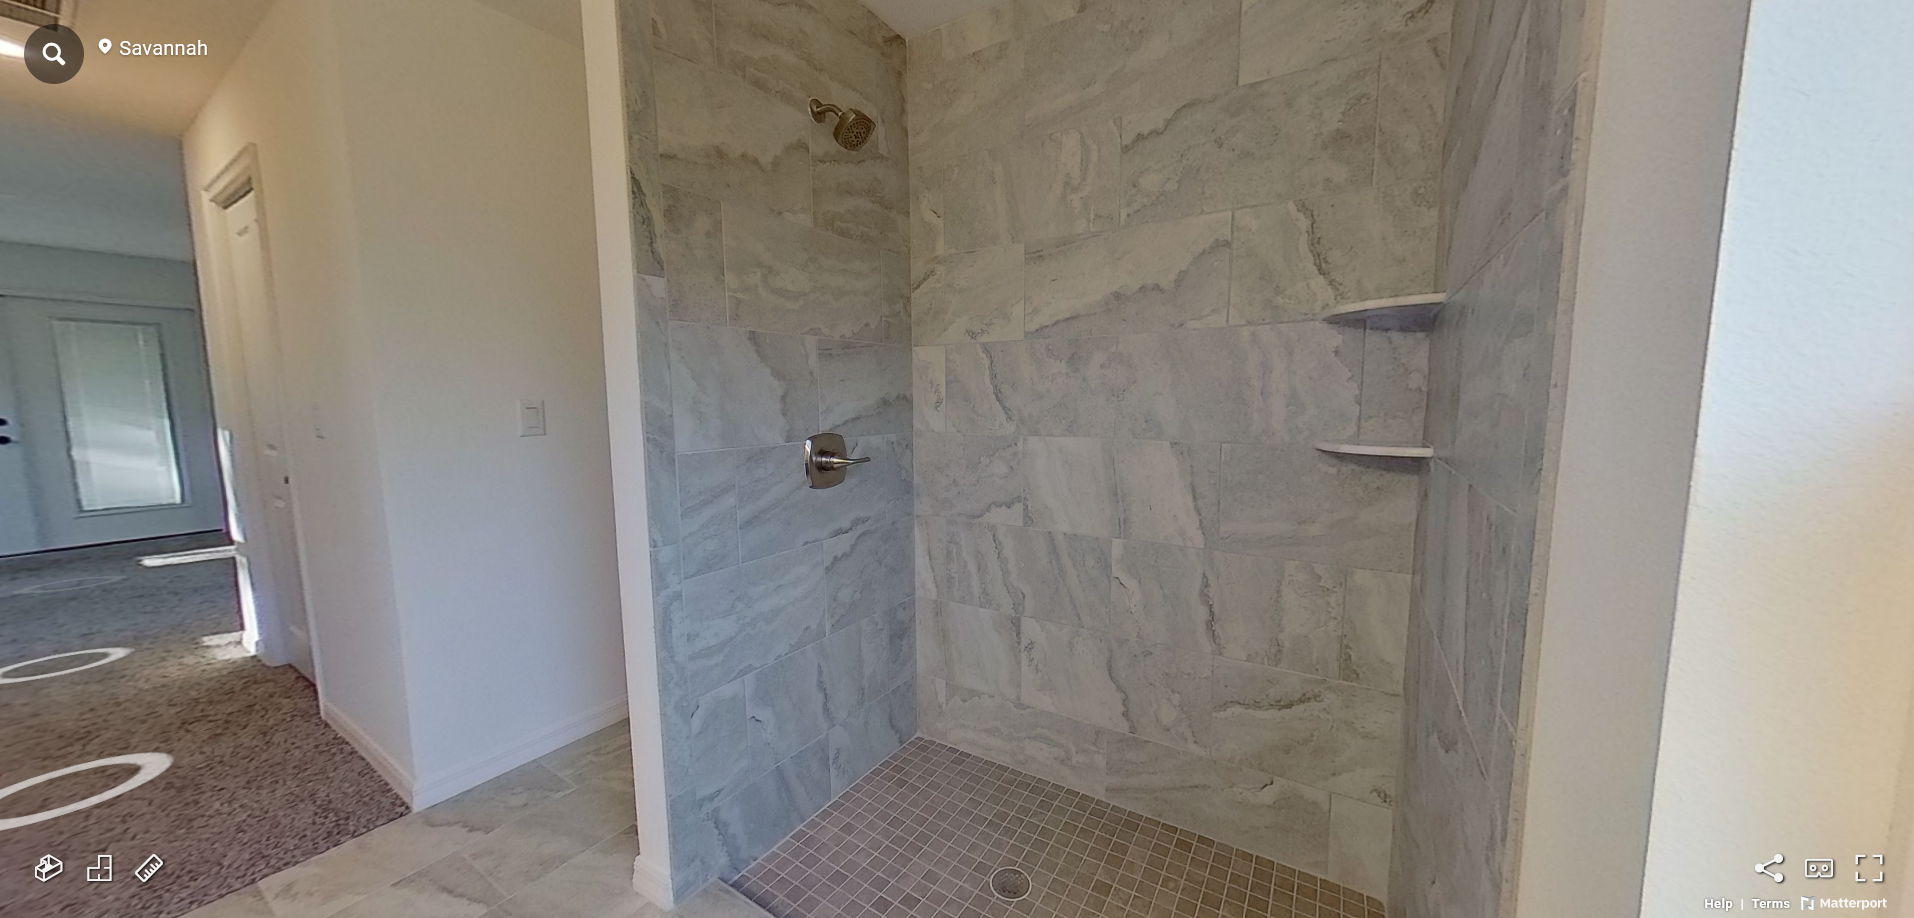 10 Savannah Master Bathroom Walk-in Shower